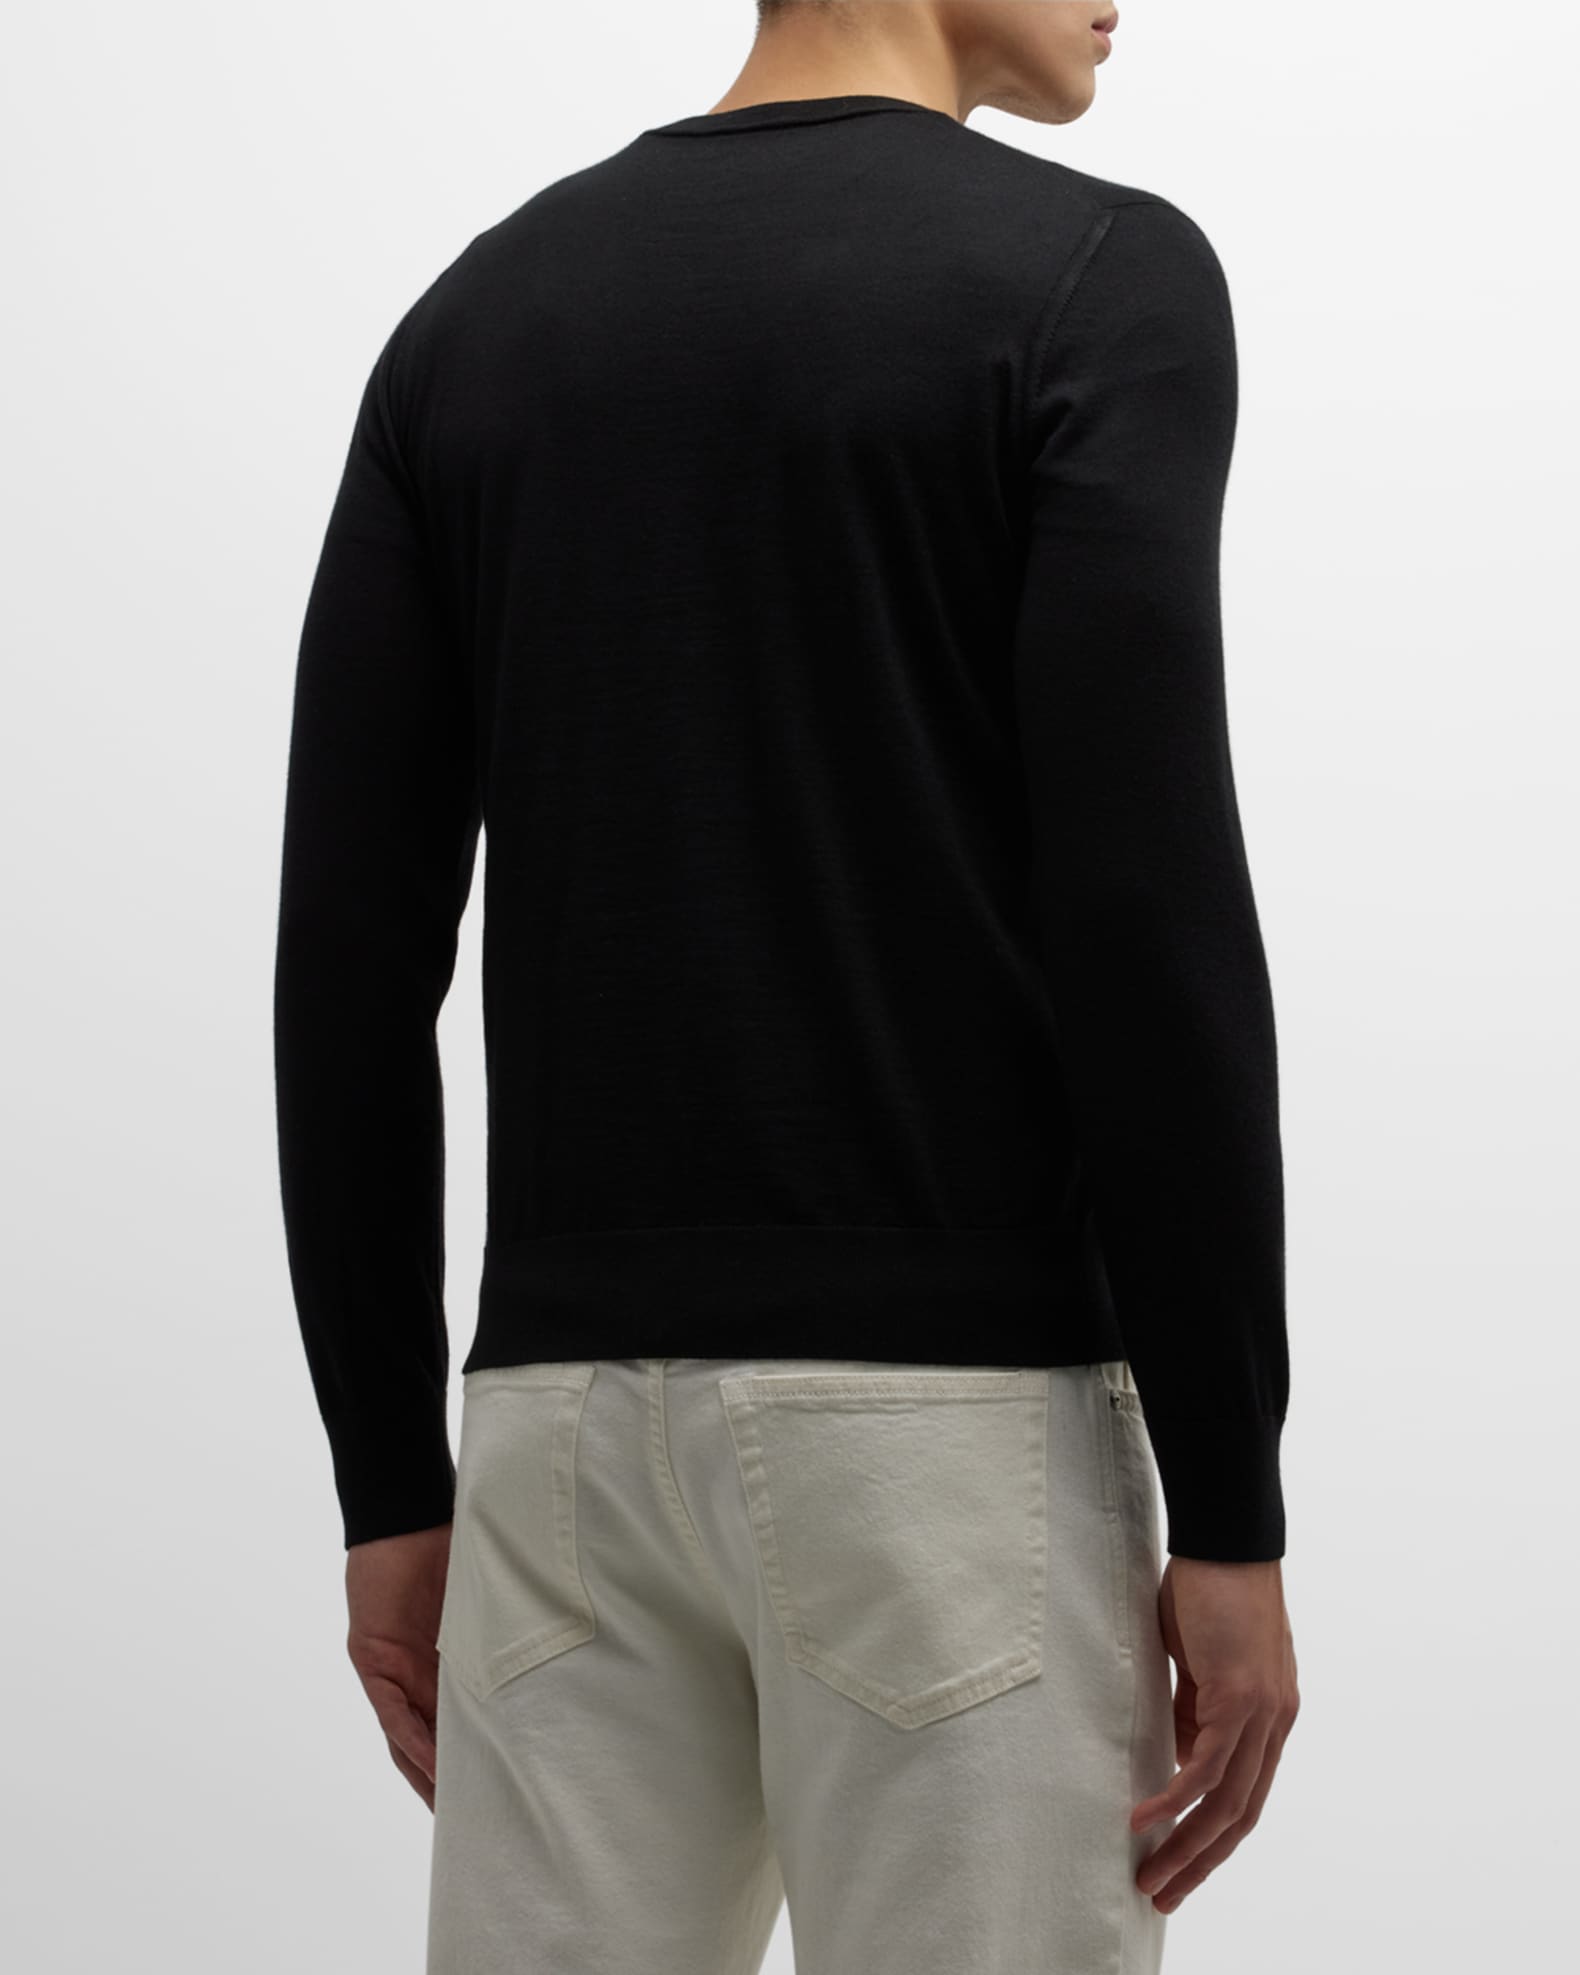 Brioni cashmere silk fine-knit cardigan - Black